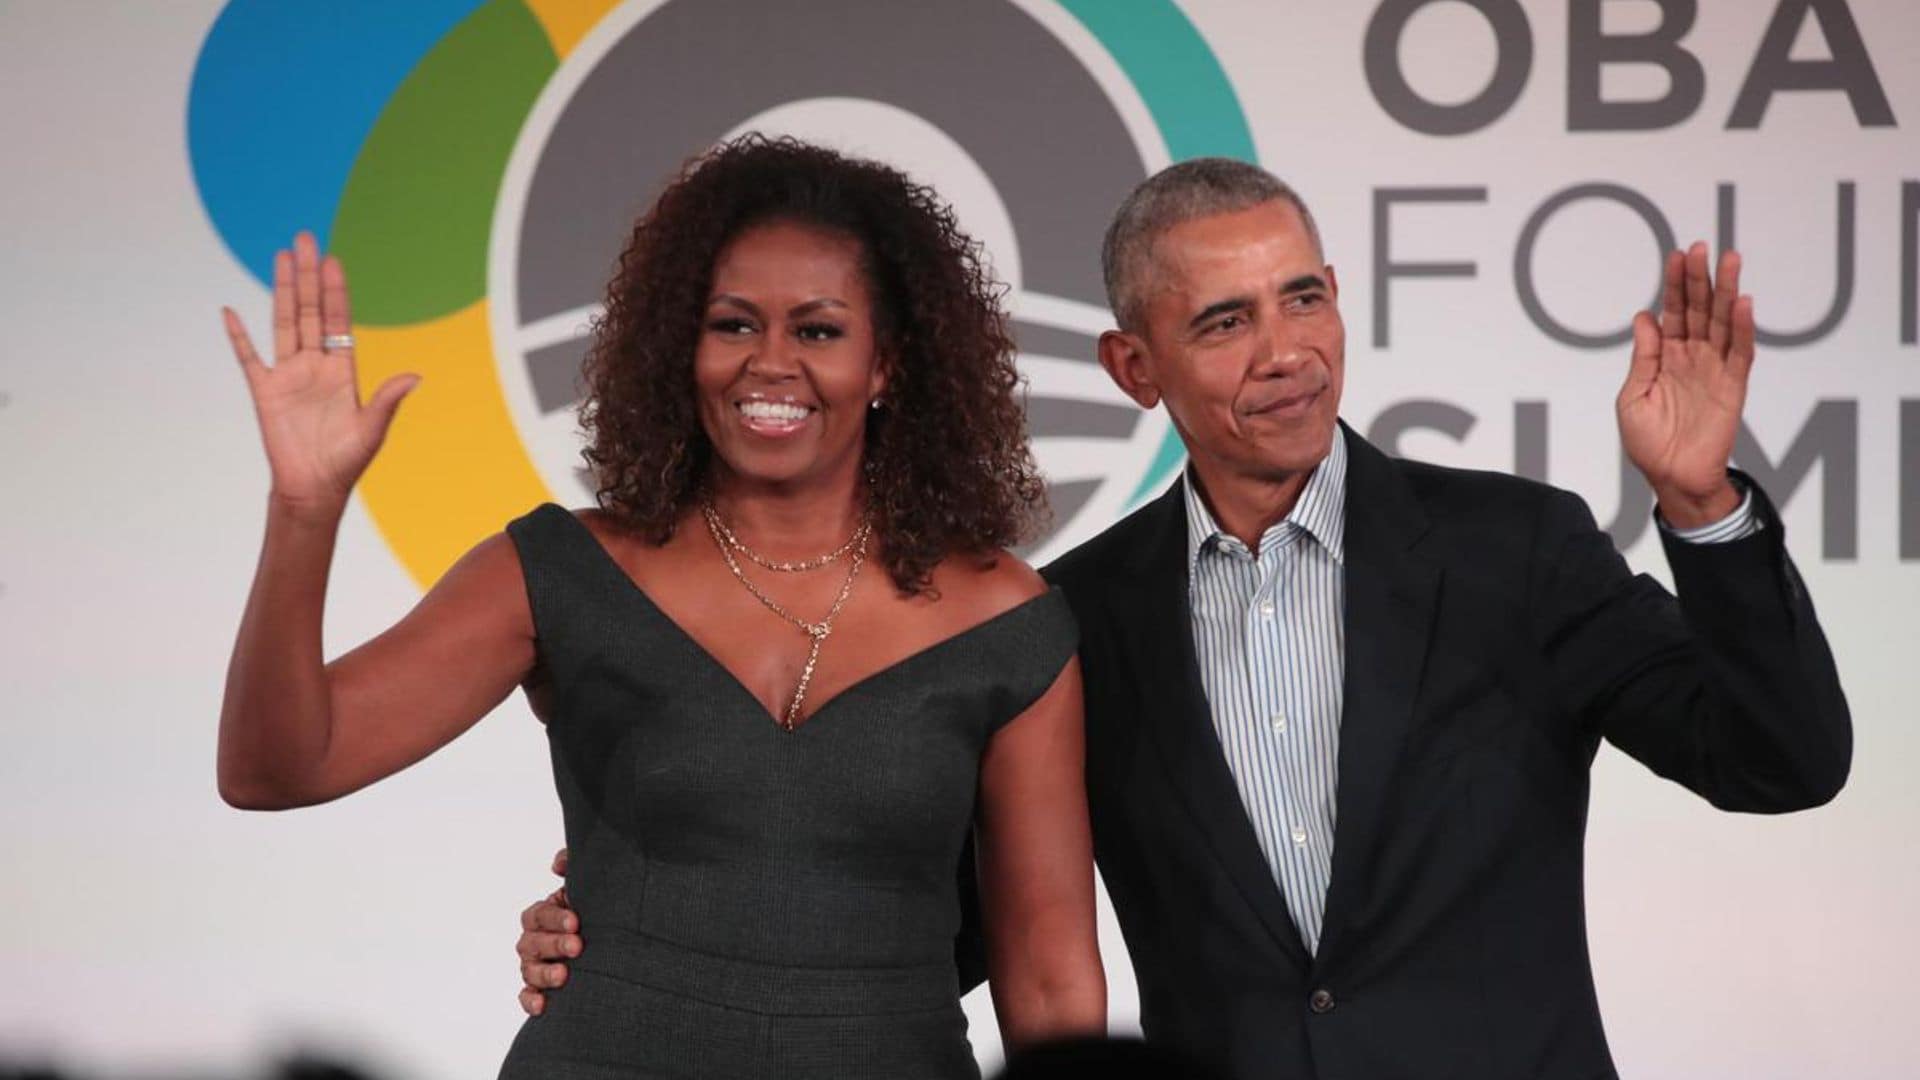 Barack Obama revealed that Michelle Obama advised Sasha and Malia to steer away from politics